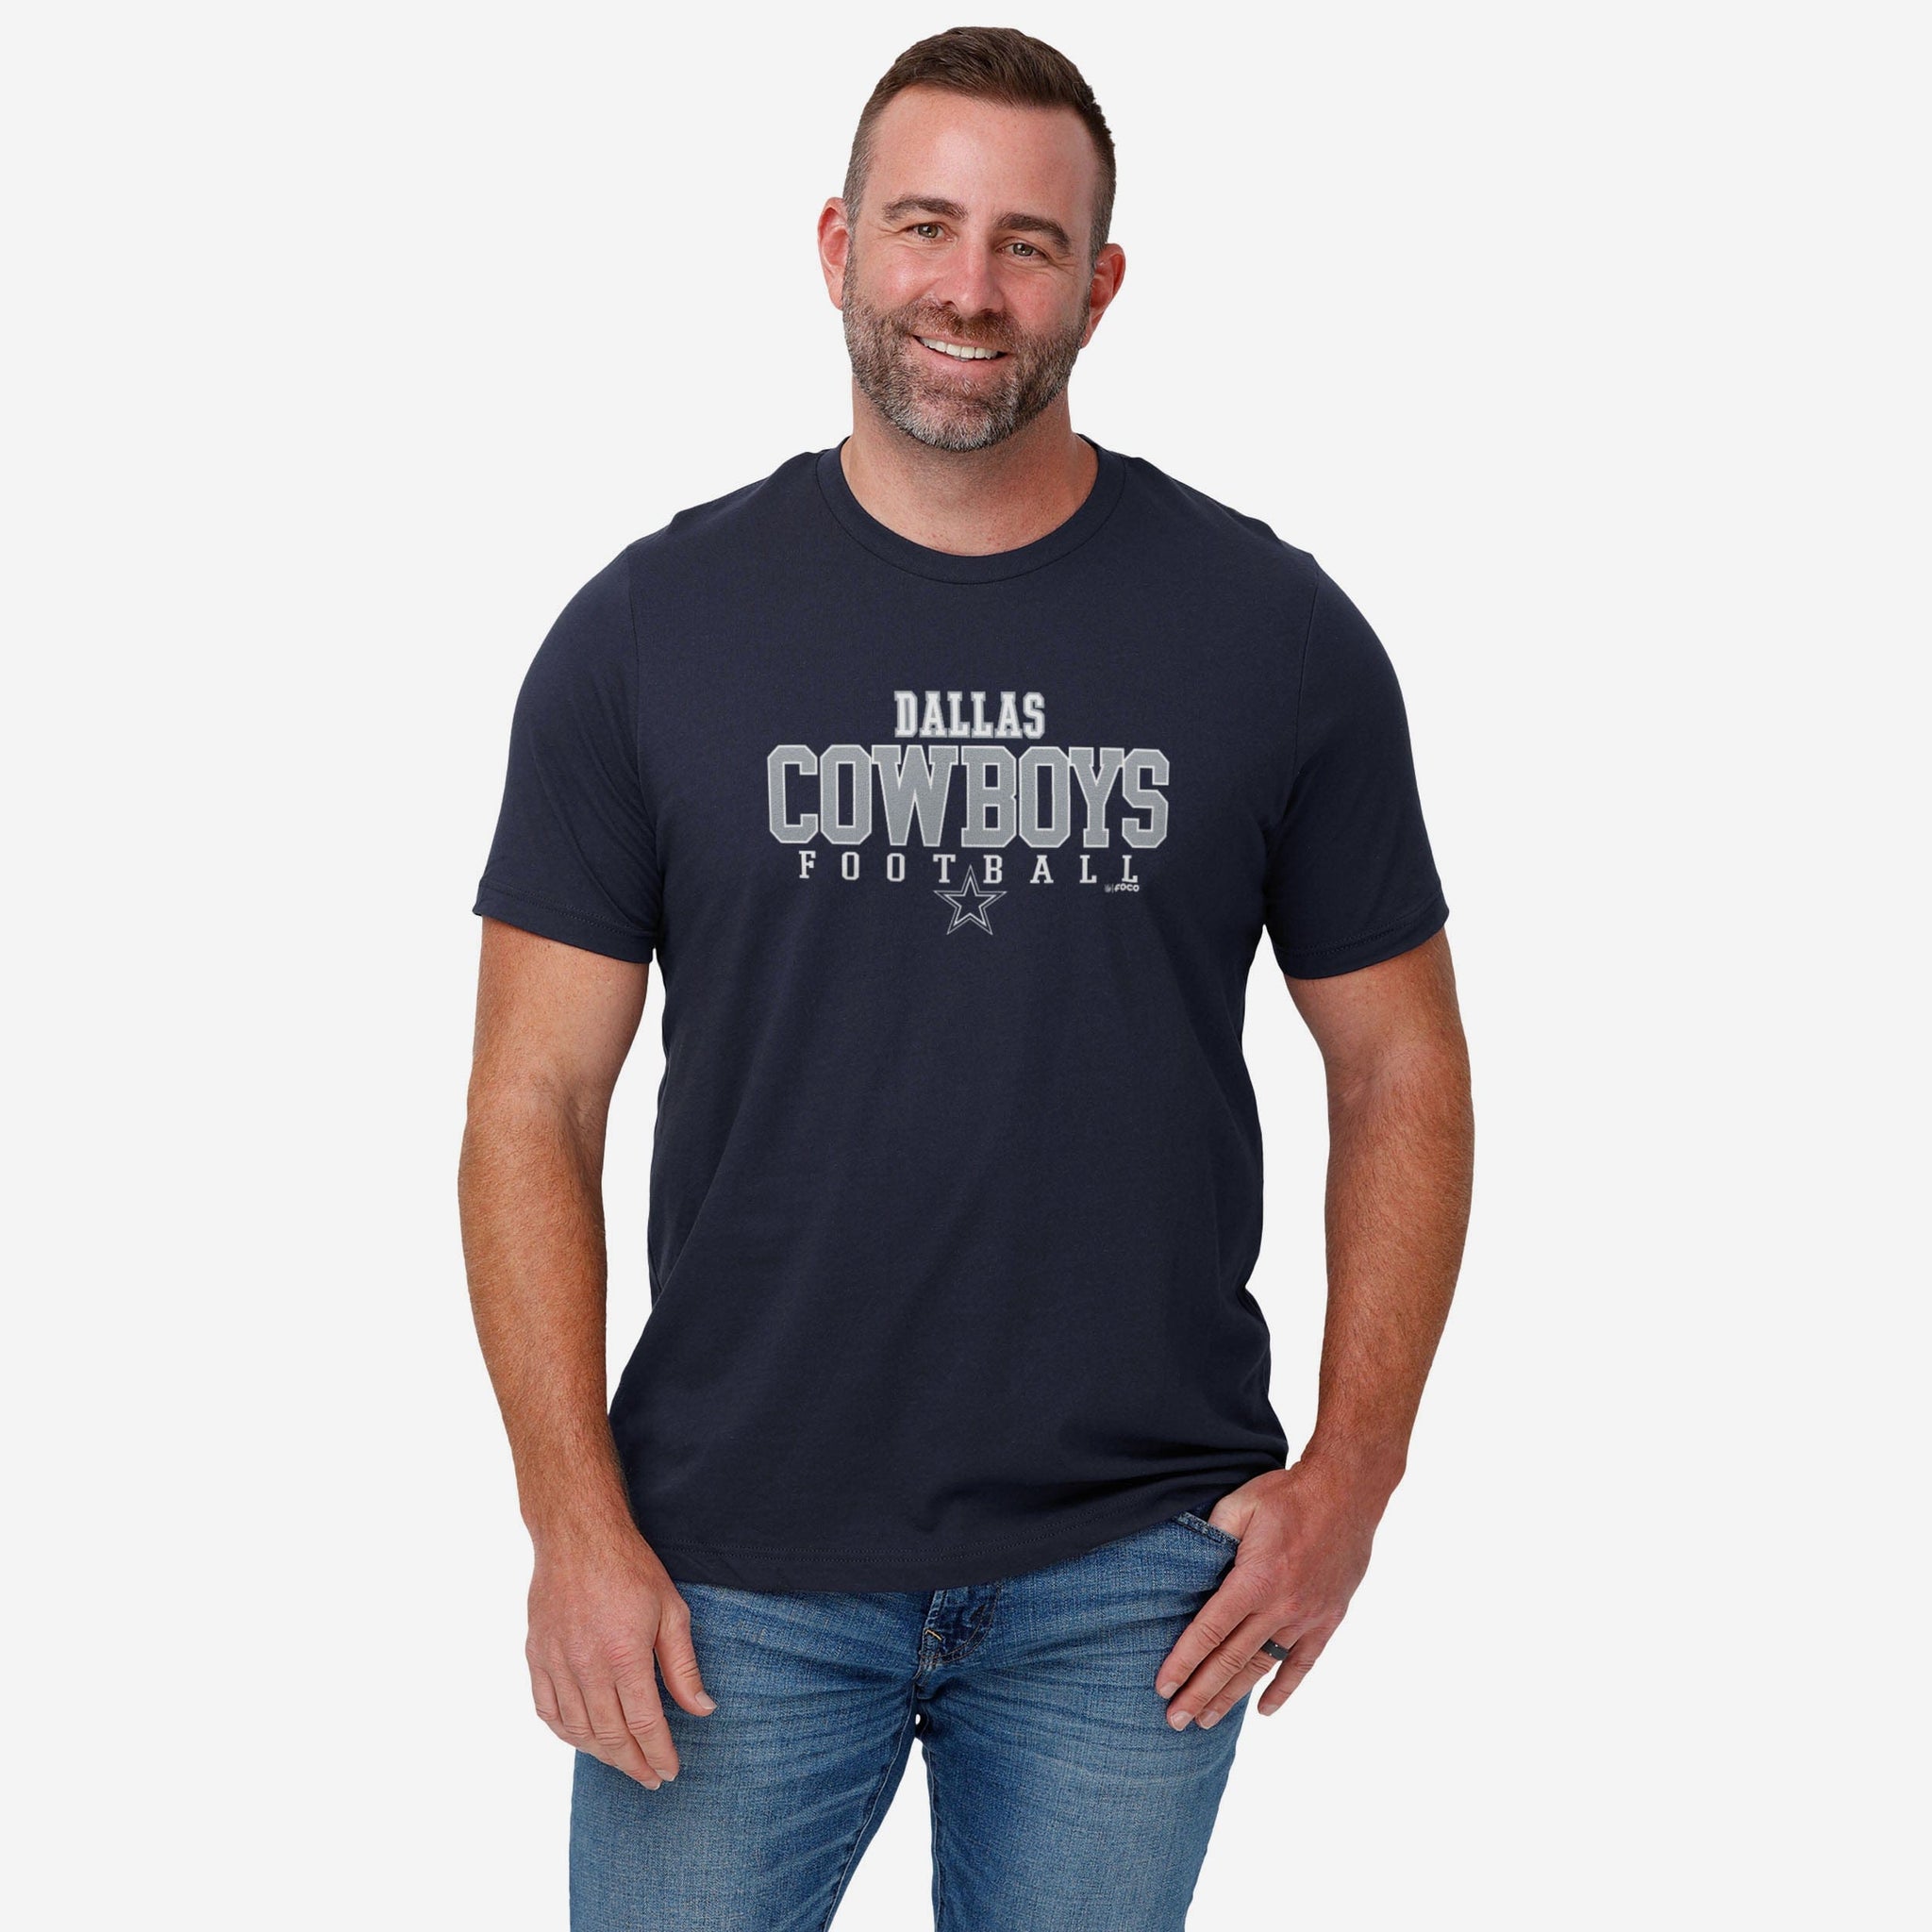 cowboys football t shirt